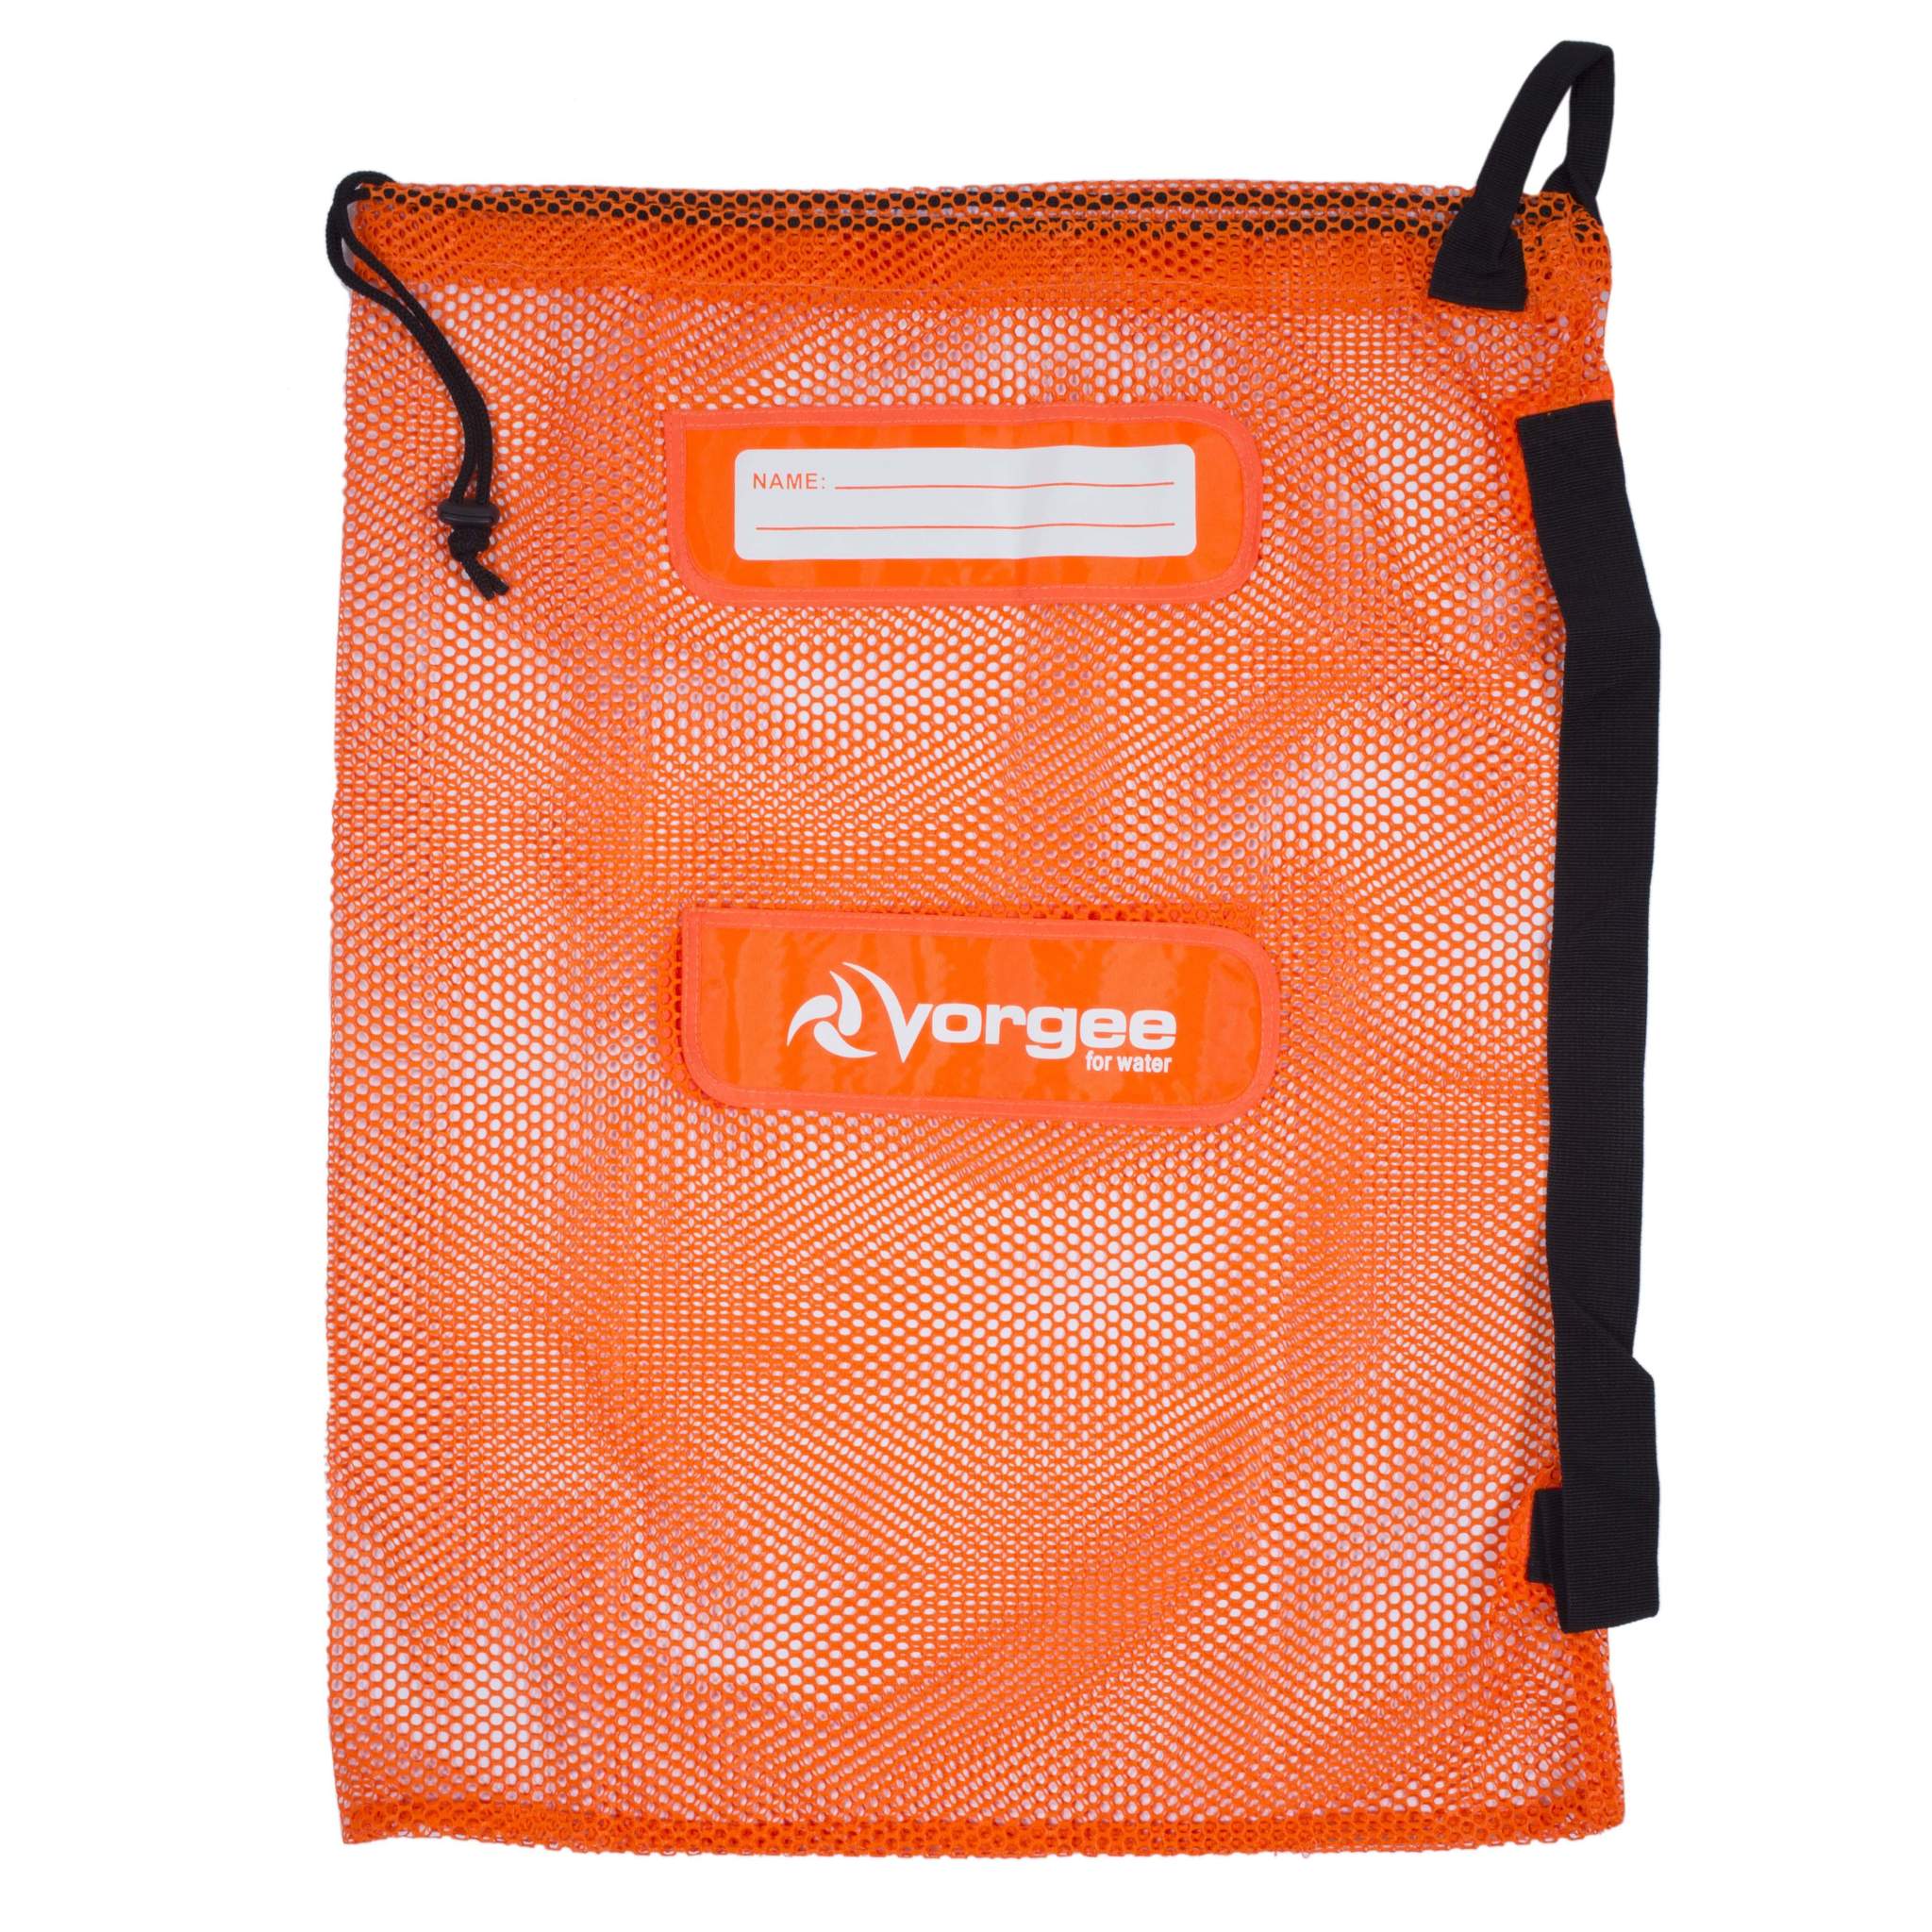 Vorgee Mesh Equipment Bag